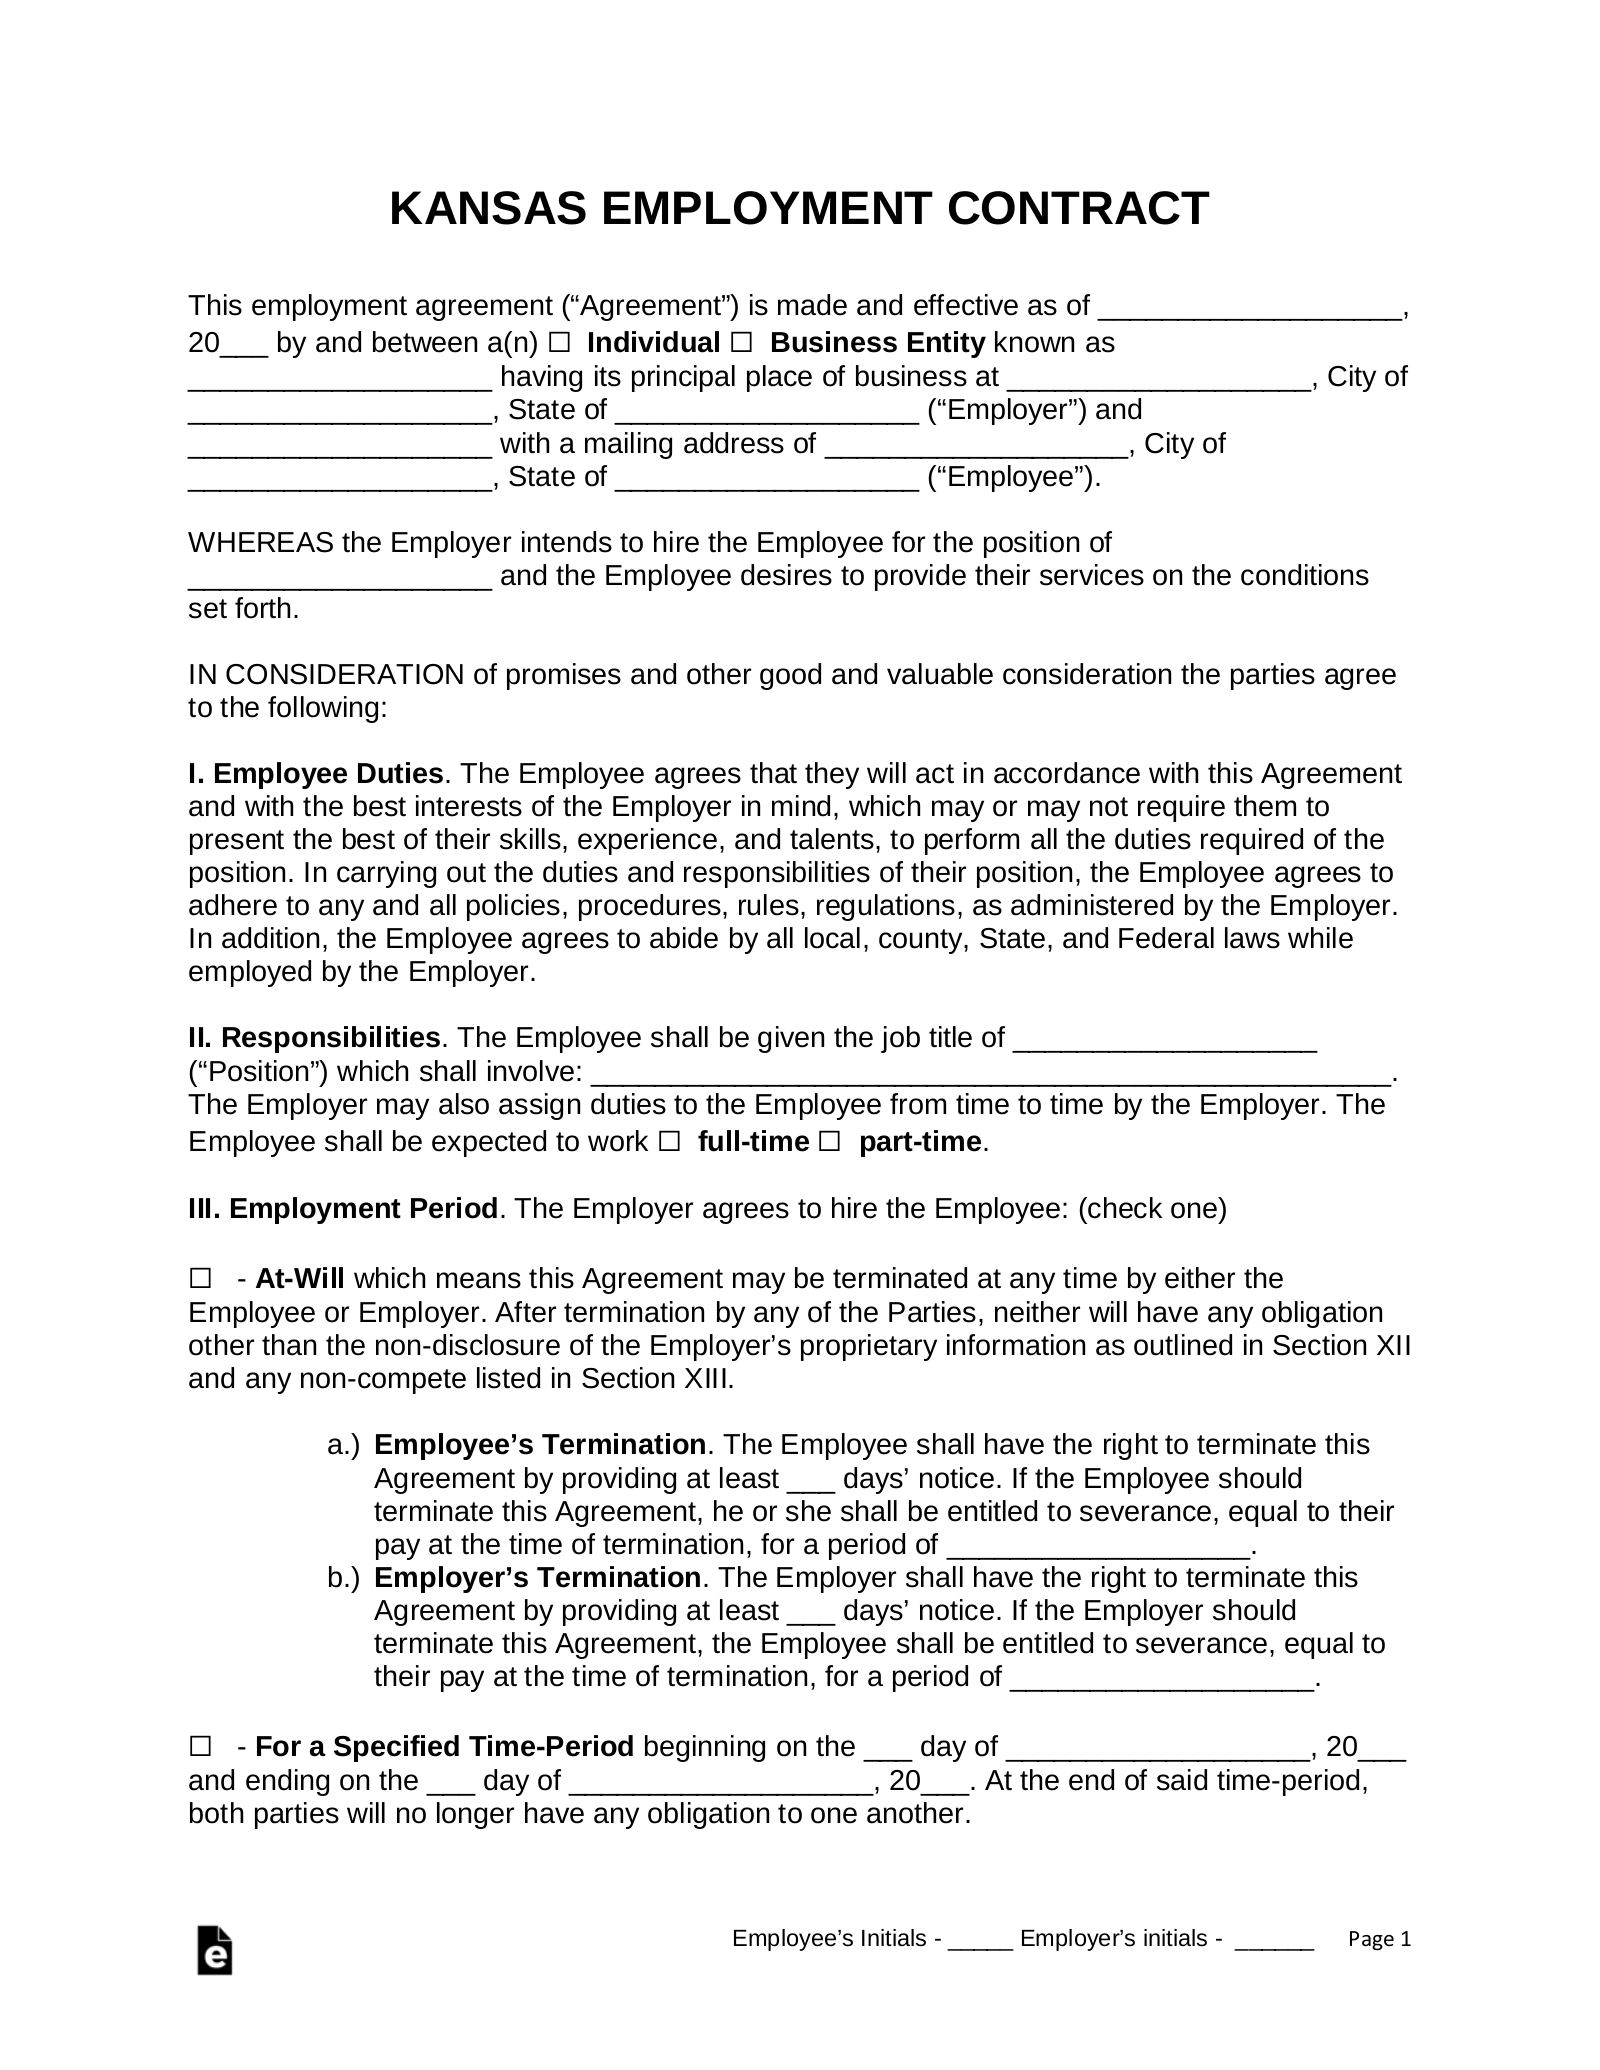 Kansas Employment Contract Templates (4)